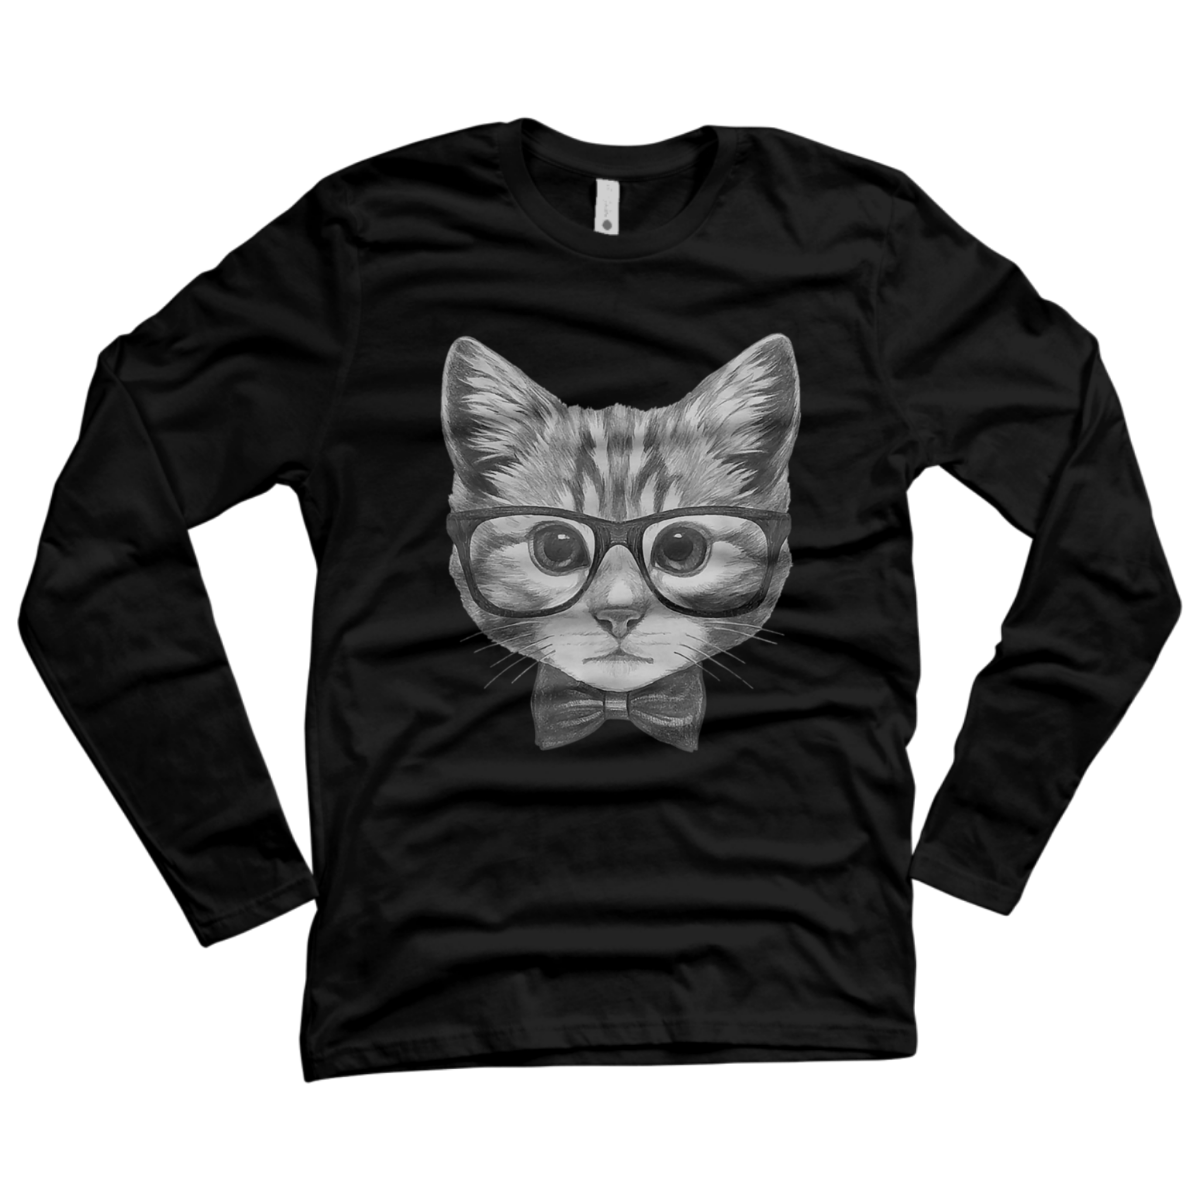 cat wearing glasses shirt